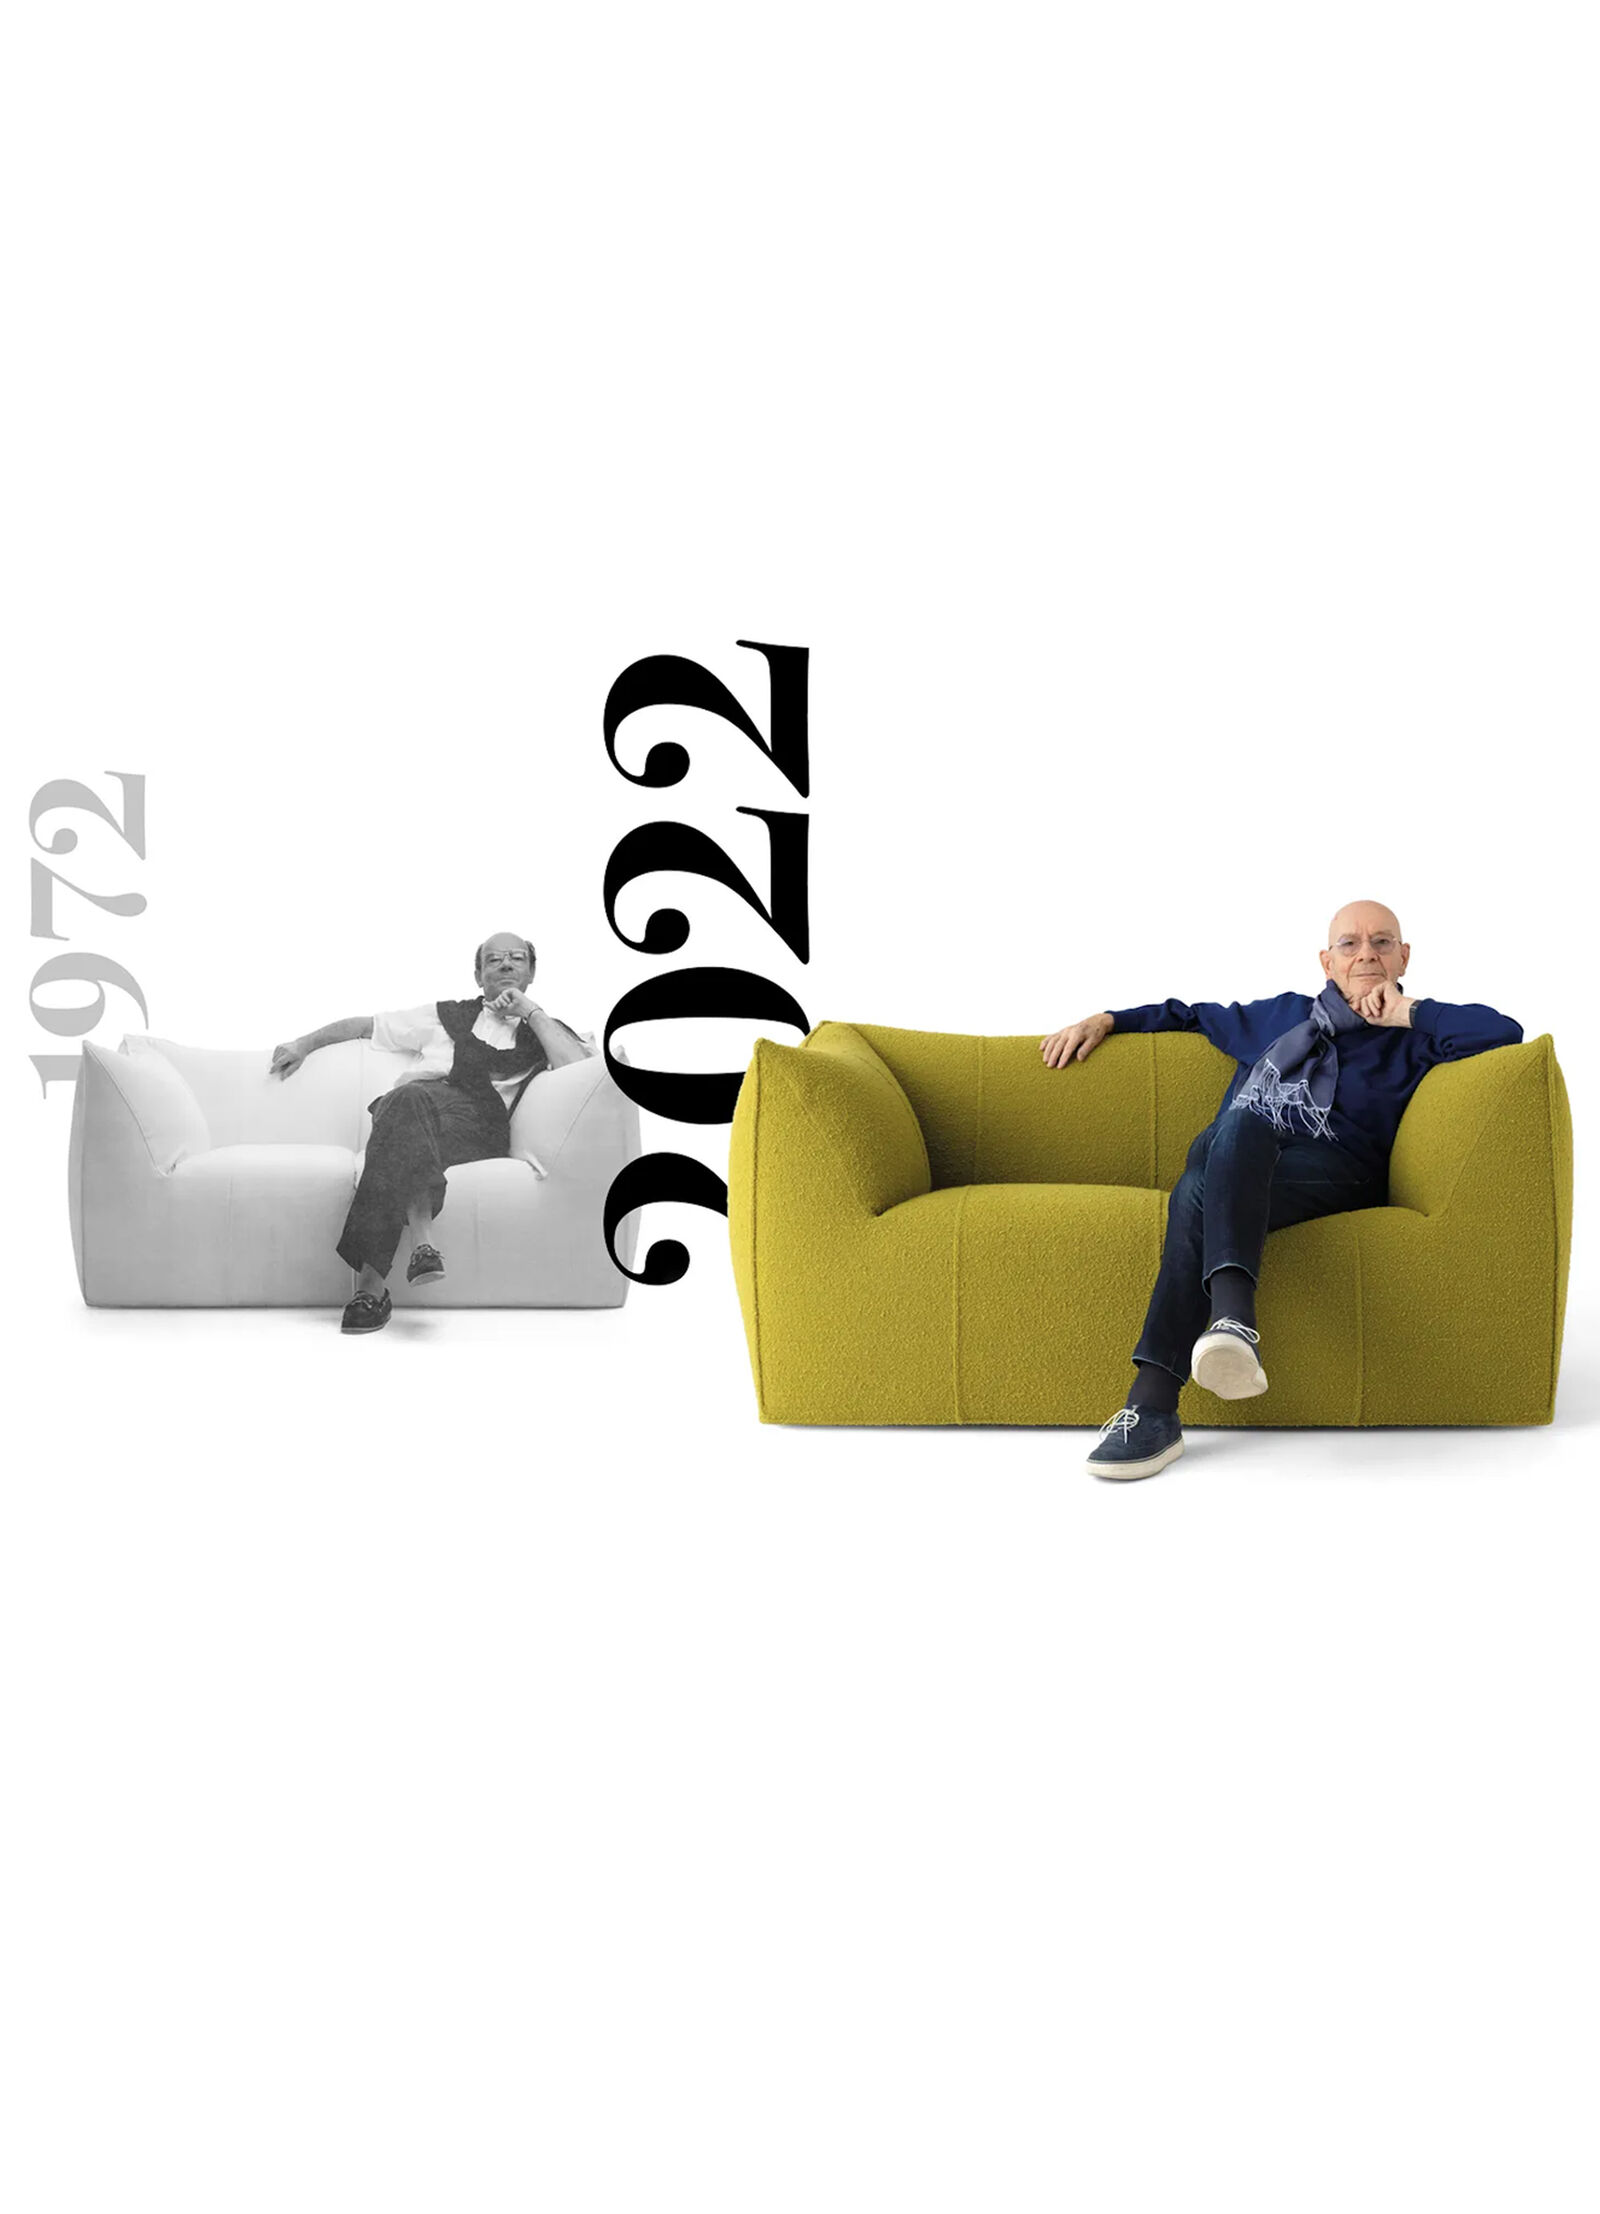 Le Bambole 2022 in a new version. Mario Bellini is sitting on Bi-bambola Sofa